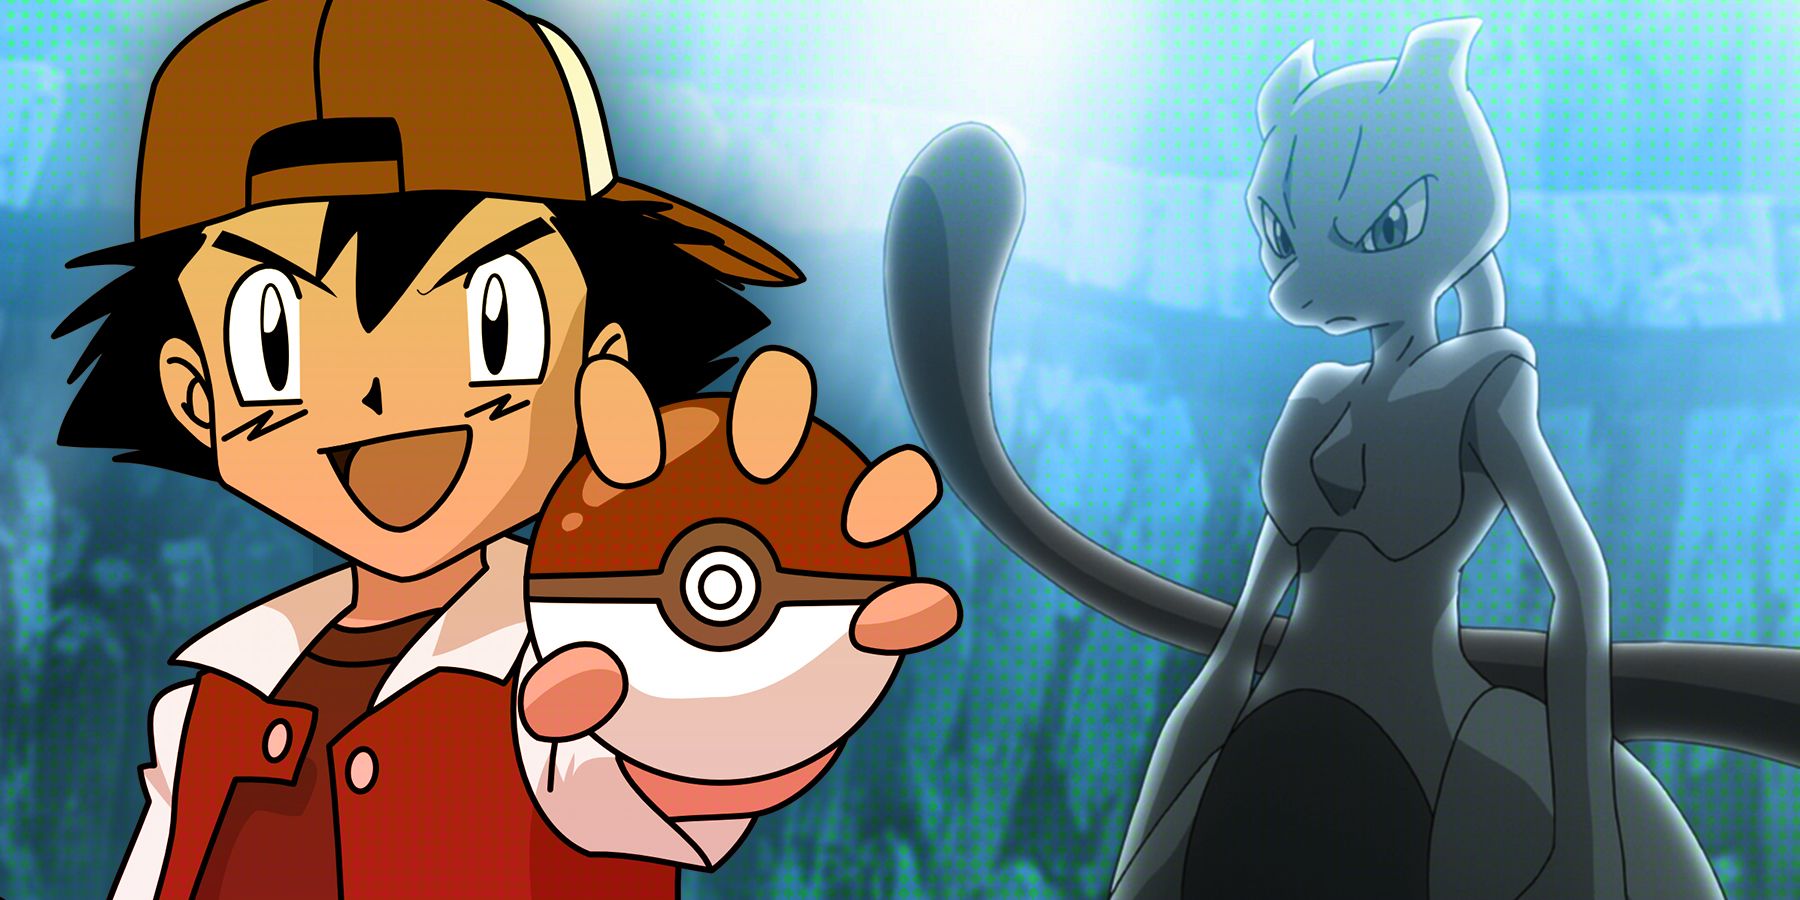 15 Most Popular Pokémon Anime Characters (According To MyAnimeList)